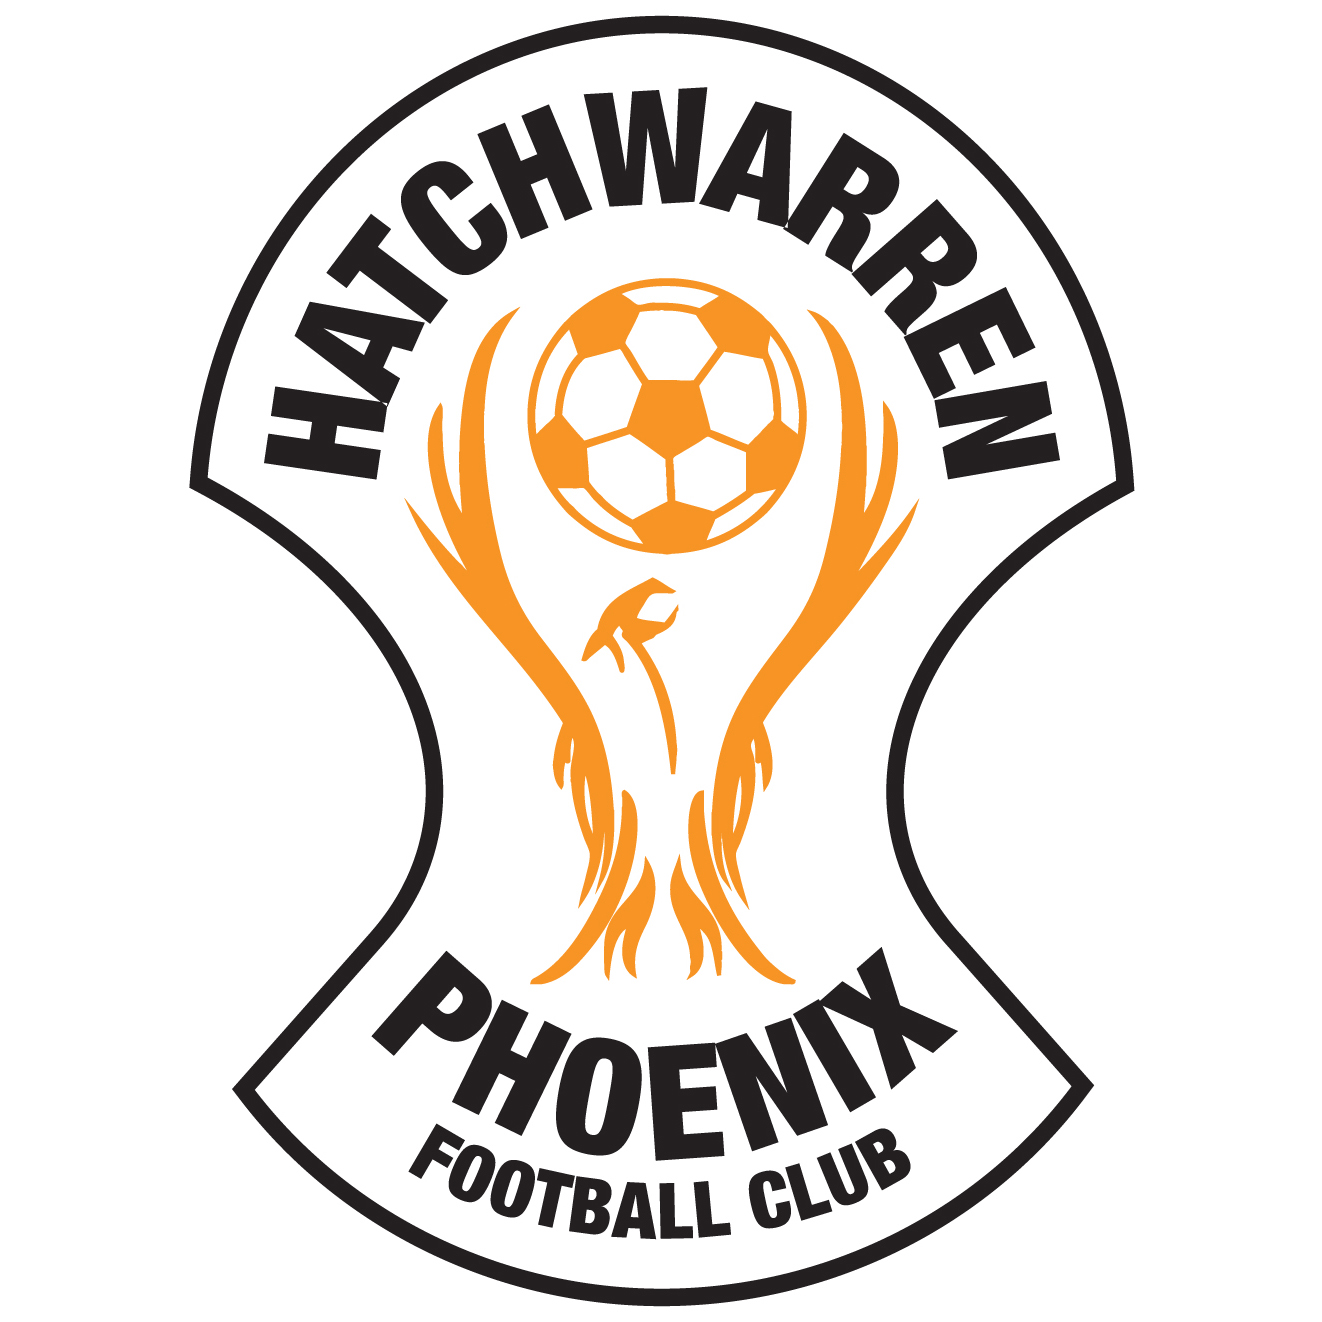 The Abacus-Employment sponsored Hatch Warren Phoenix FC